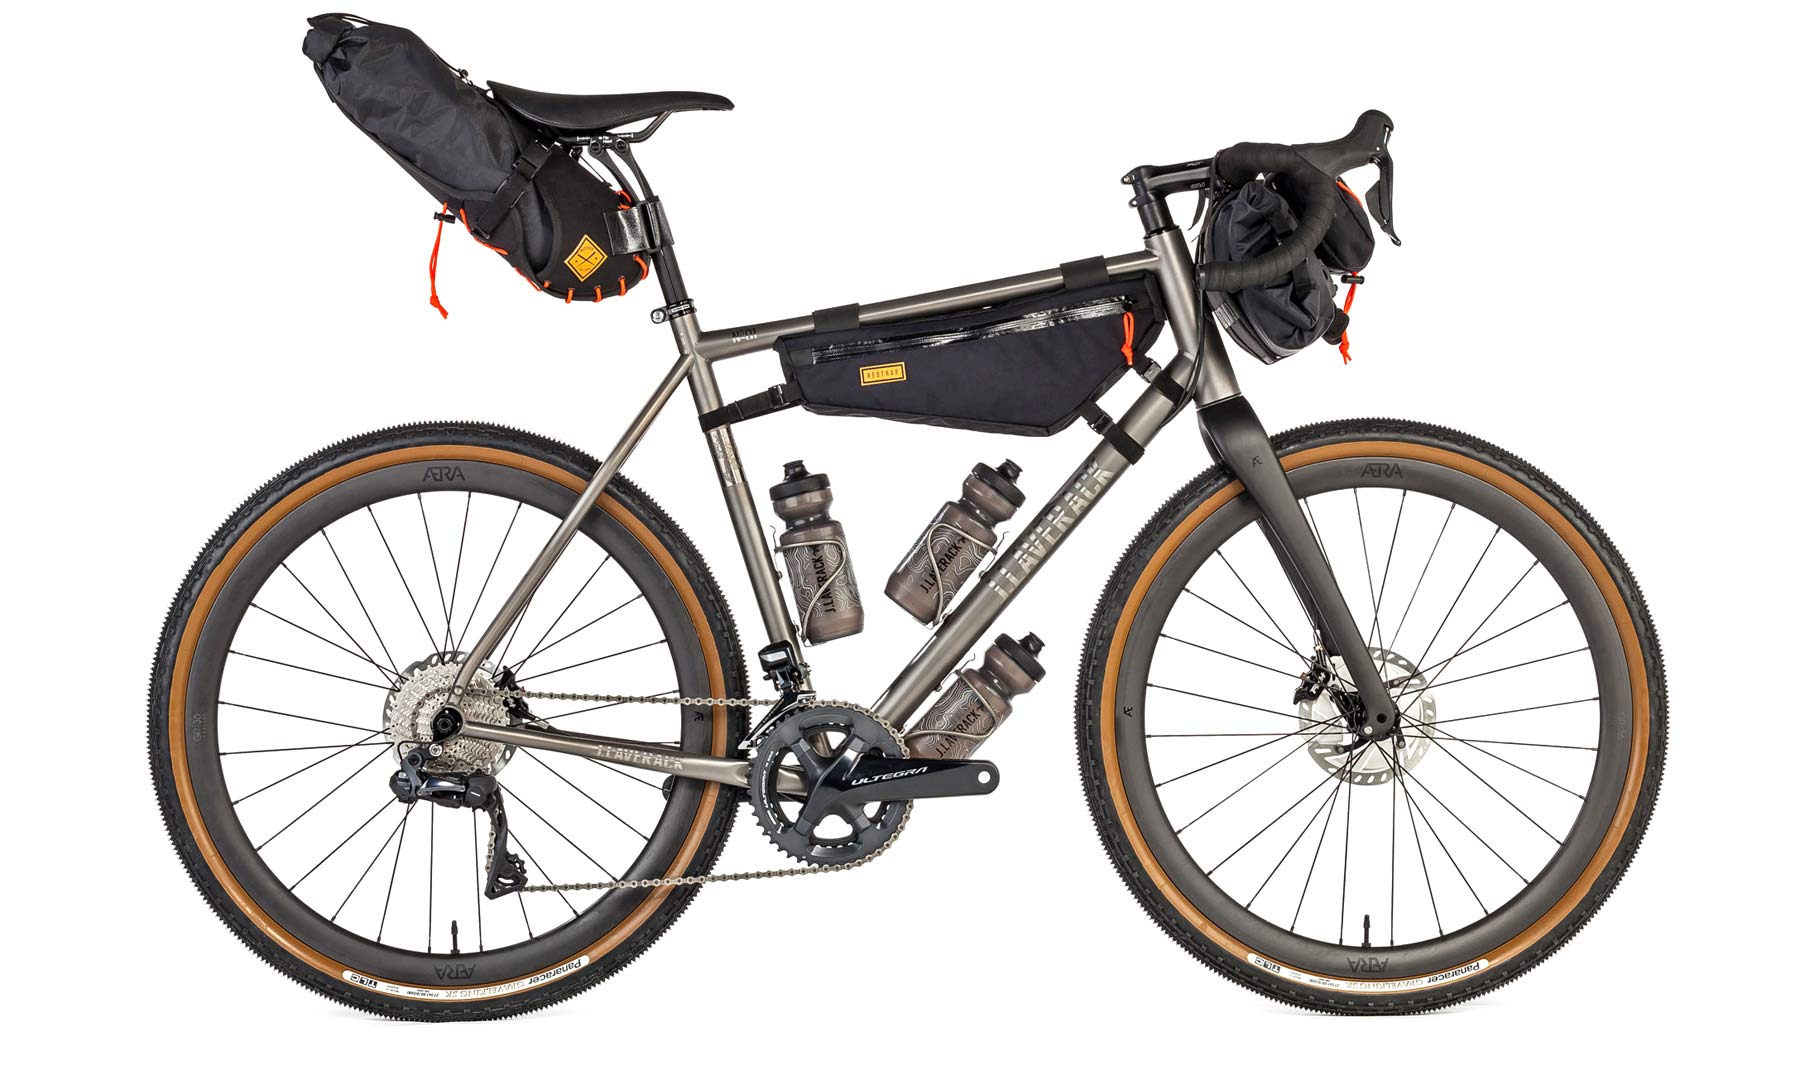 J.Laverack GRiT made-to-order titanium gravel bike, ready for adventure